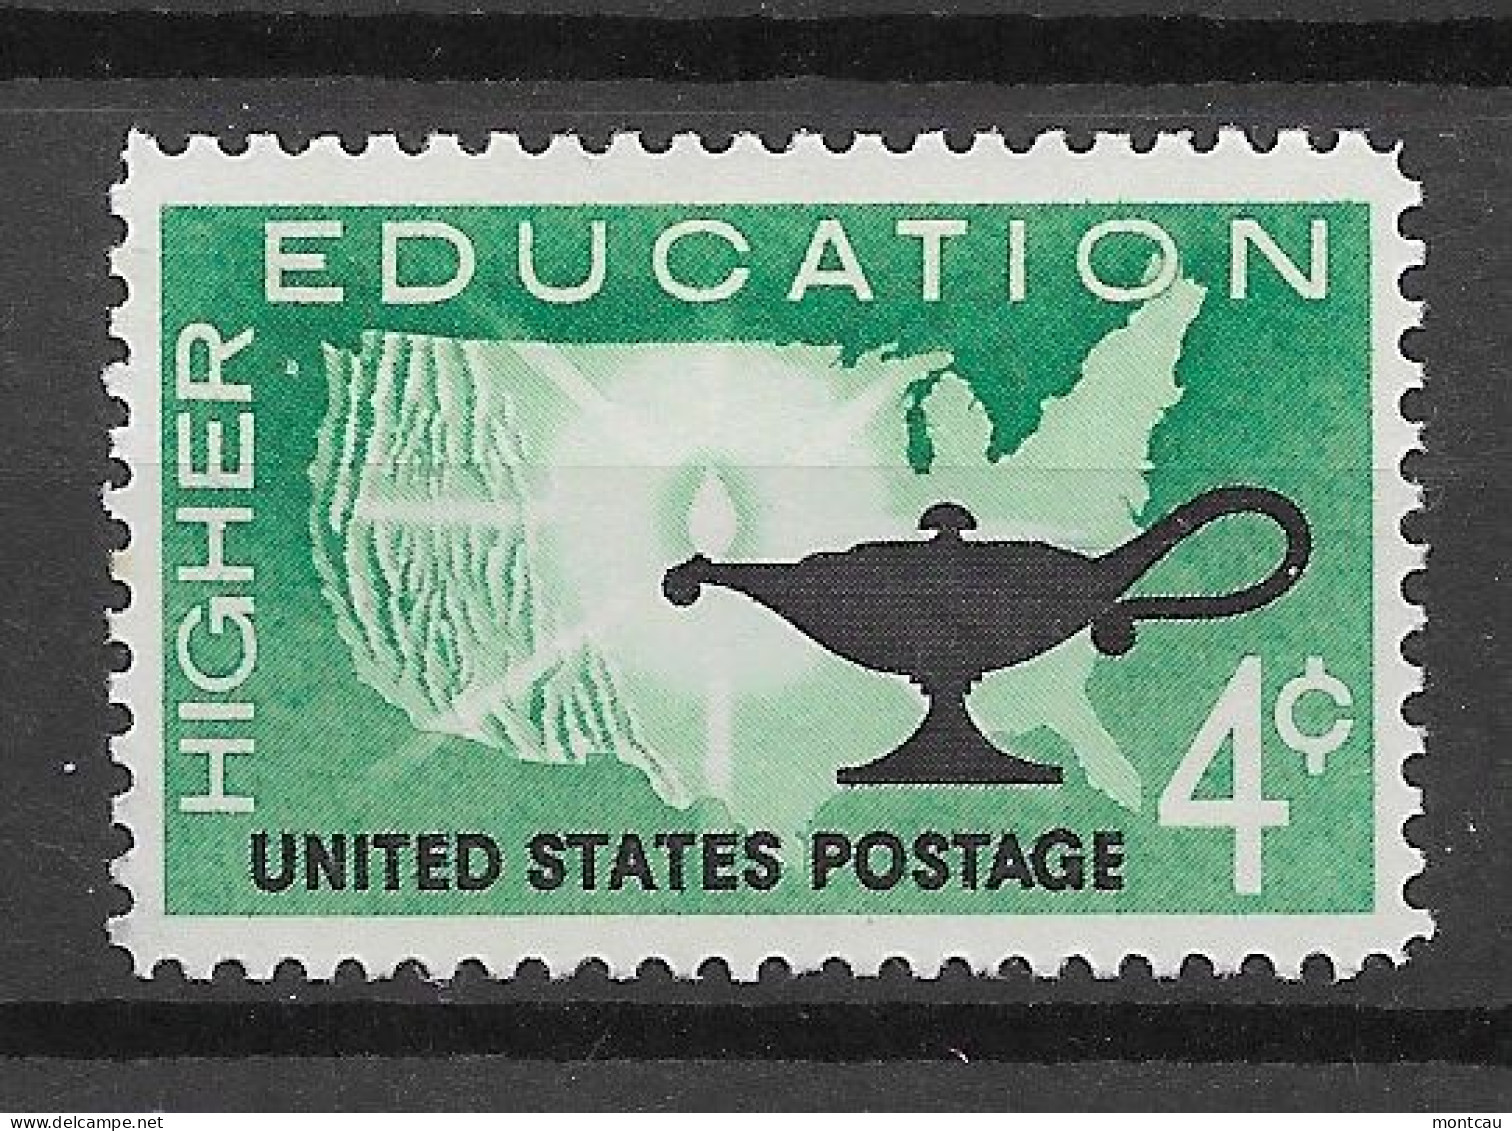 USA 1962.  Education Sc 1206  (**) - Nuevos